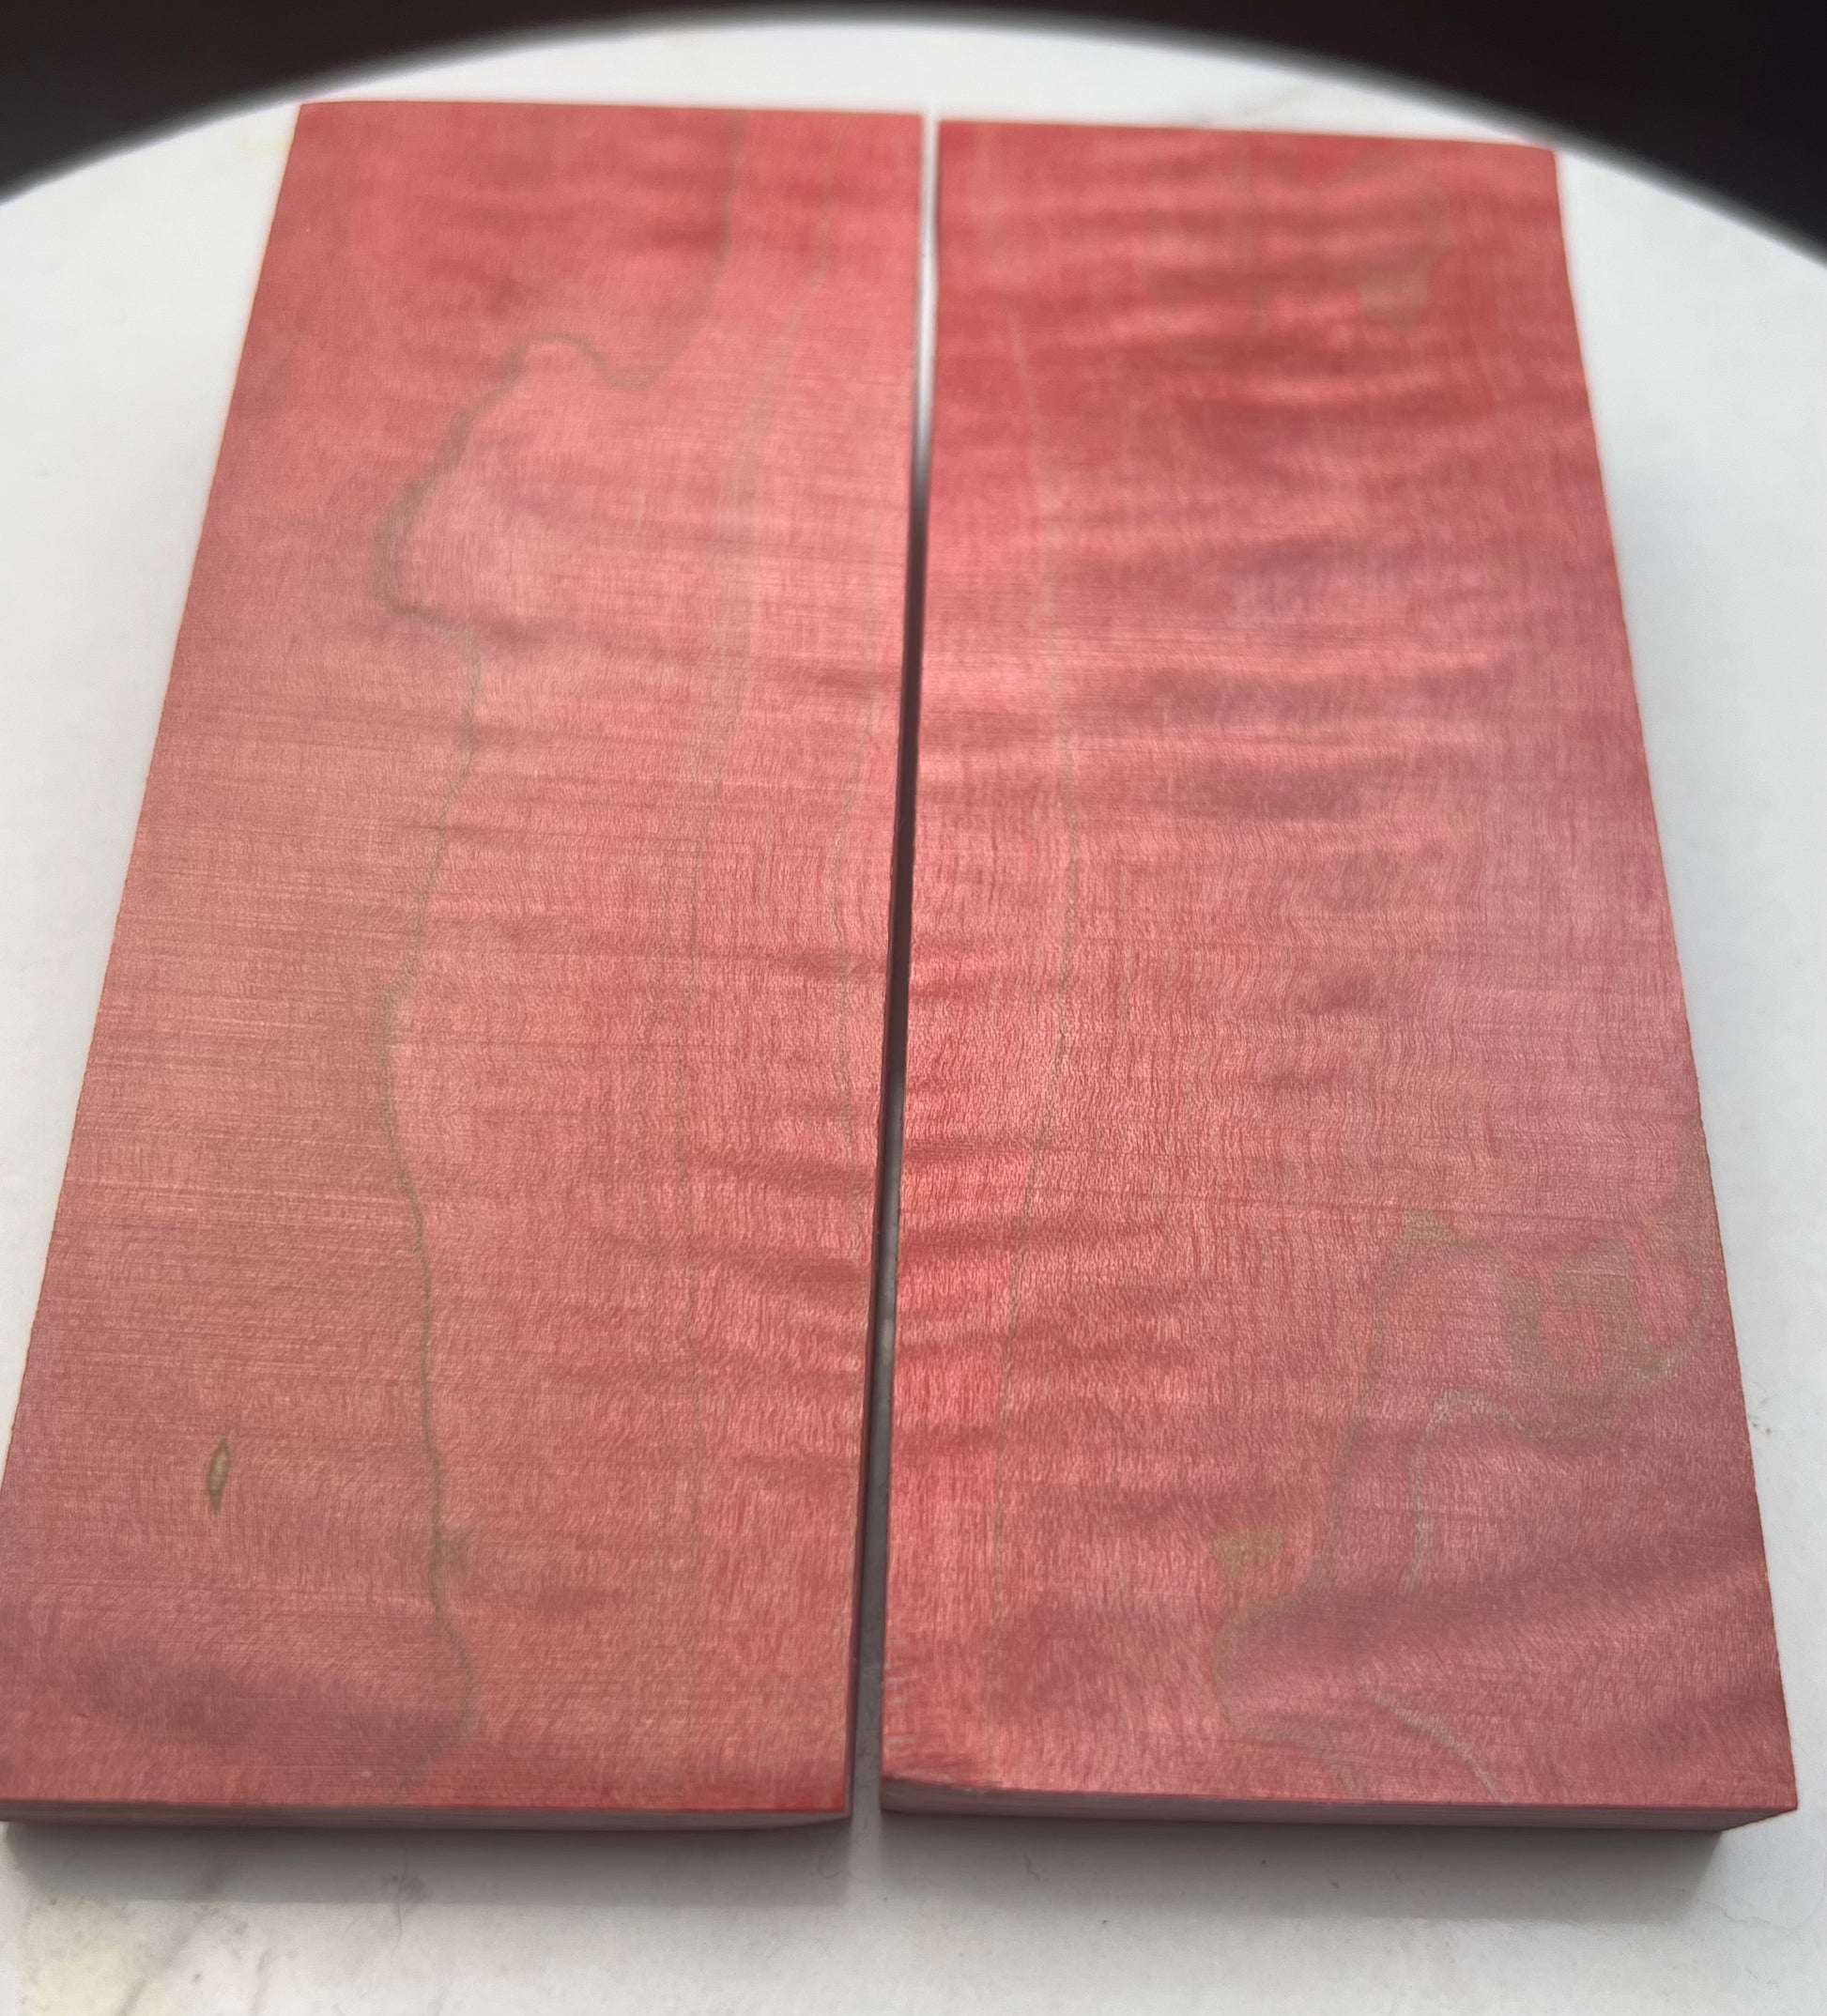 Stabilized Curly Maple knife Scales Light Reddish Orange